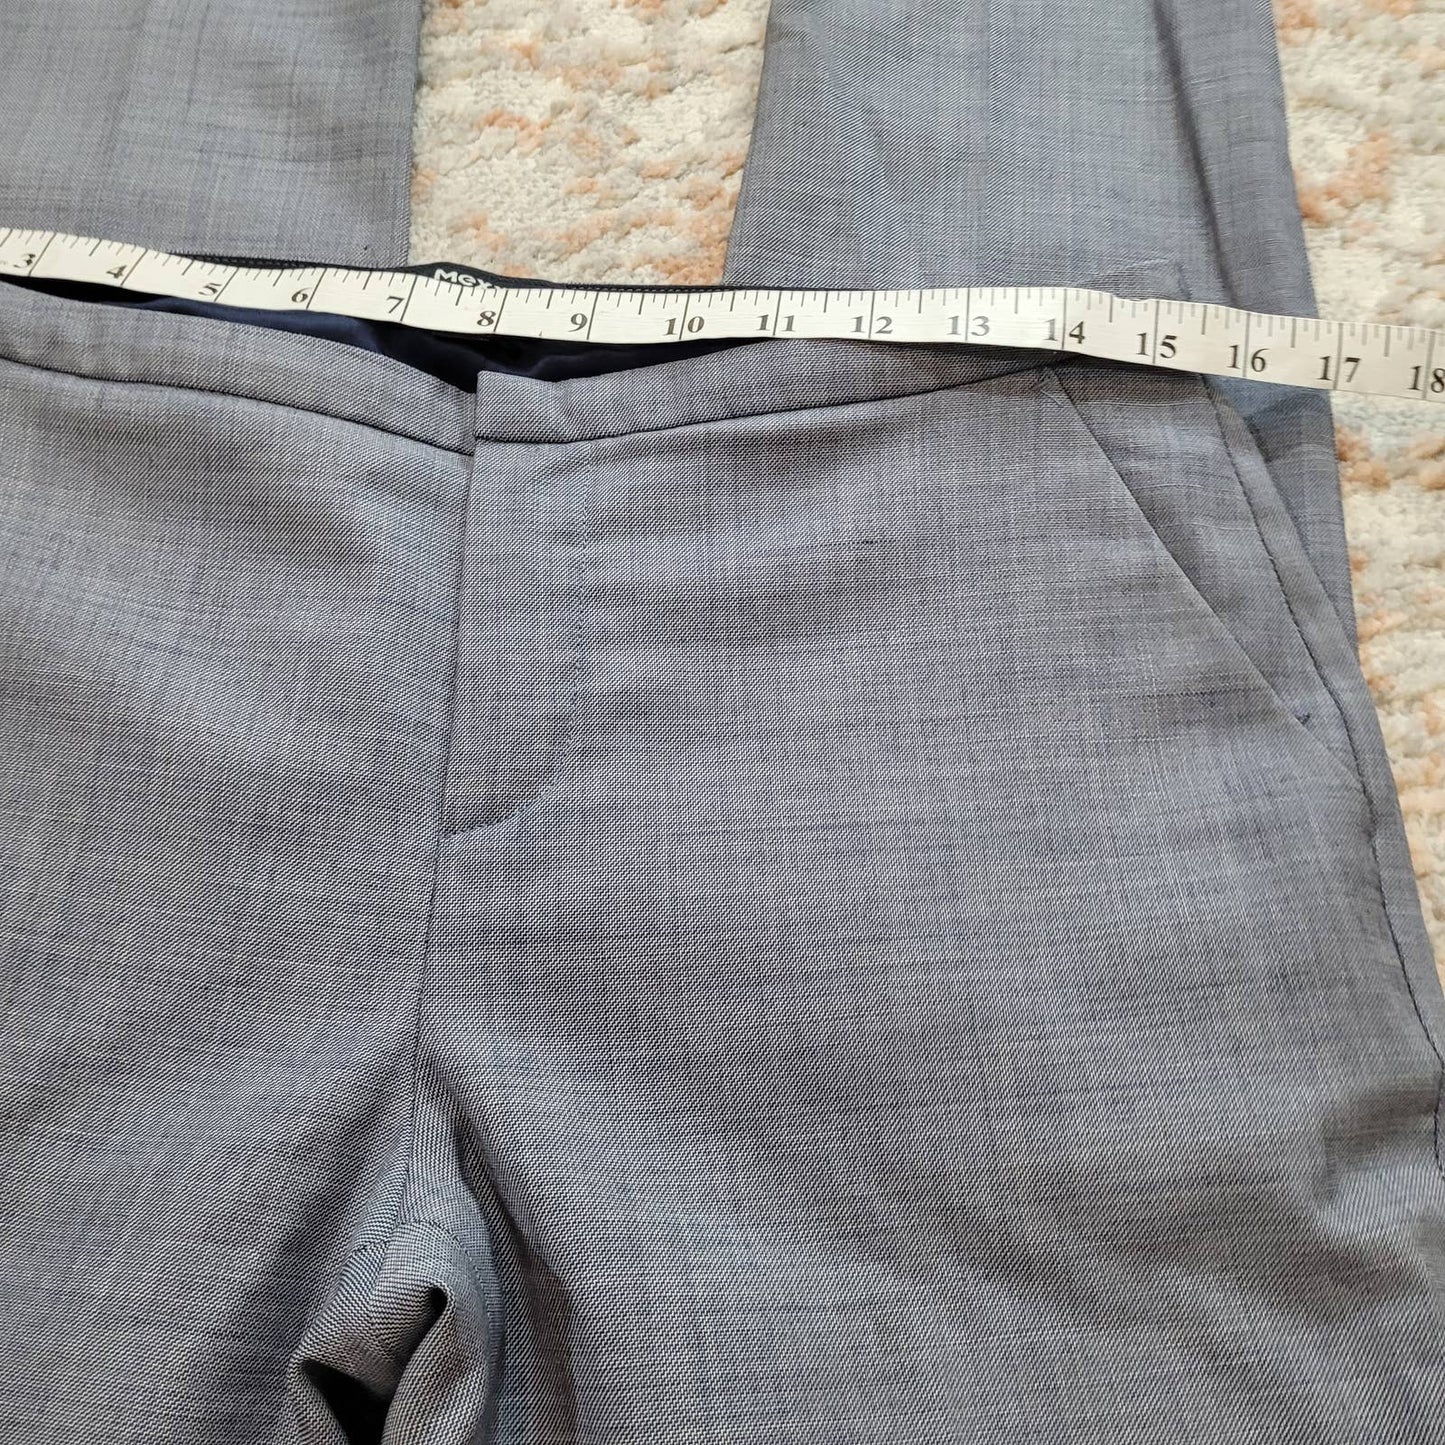 Mexx Blue Gray Dress Pants - Size Small